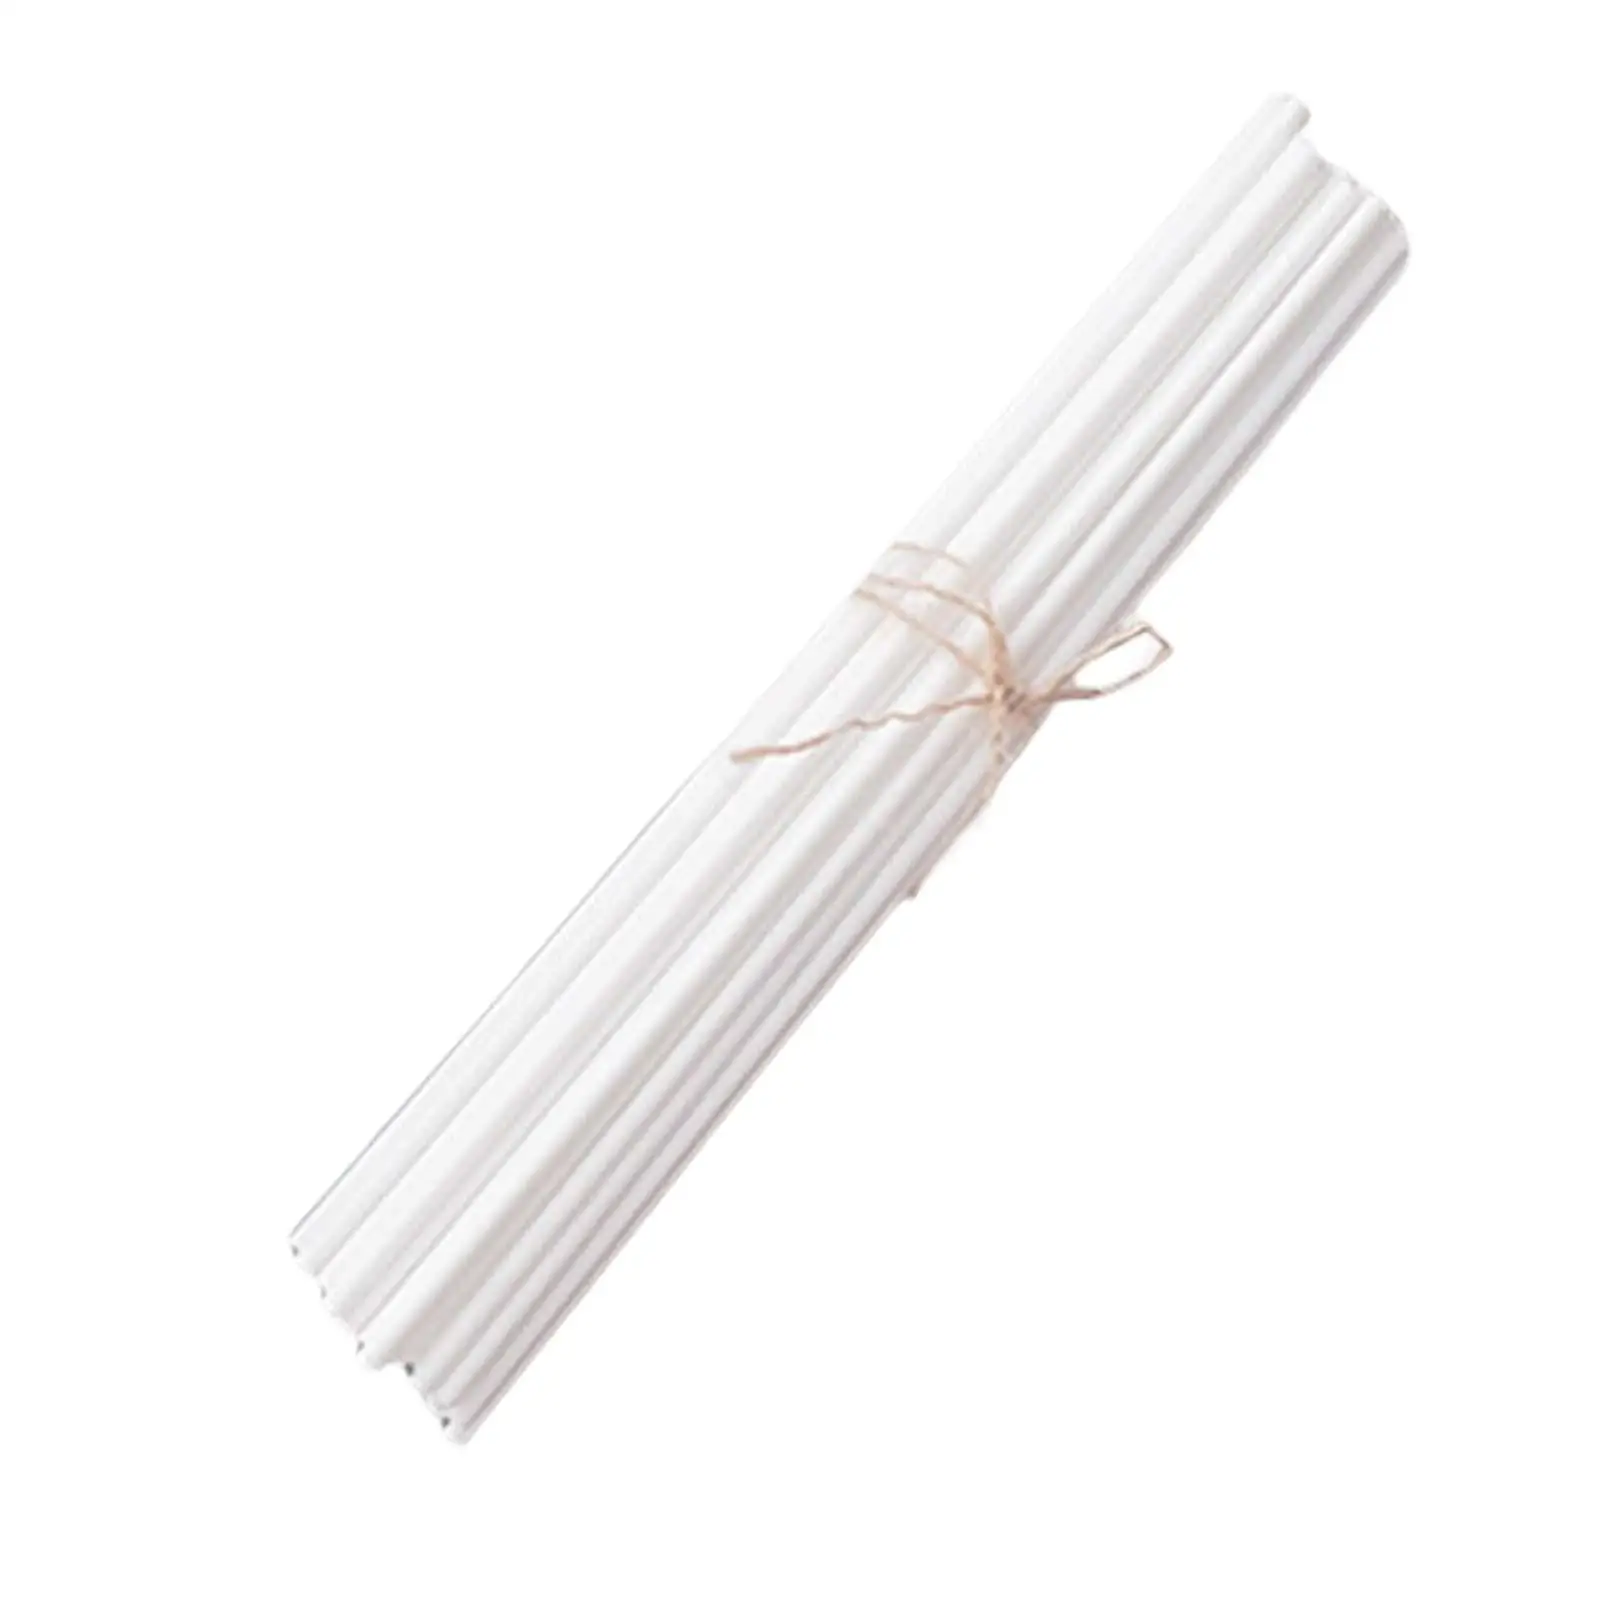 100x Reed Diffuser Sticks Set Essential Oil Rattan Reed Sticks 3mm 20cm Fragrance for Home Bedroom Living Room Kitchen